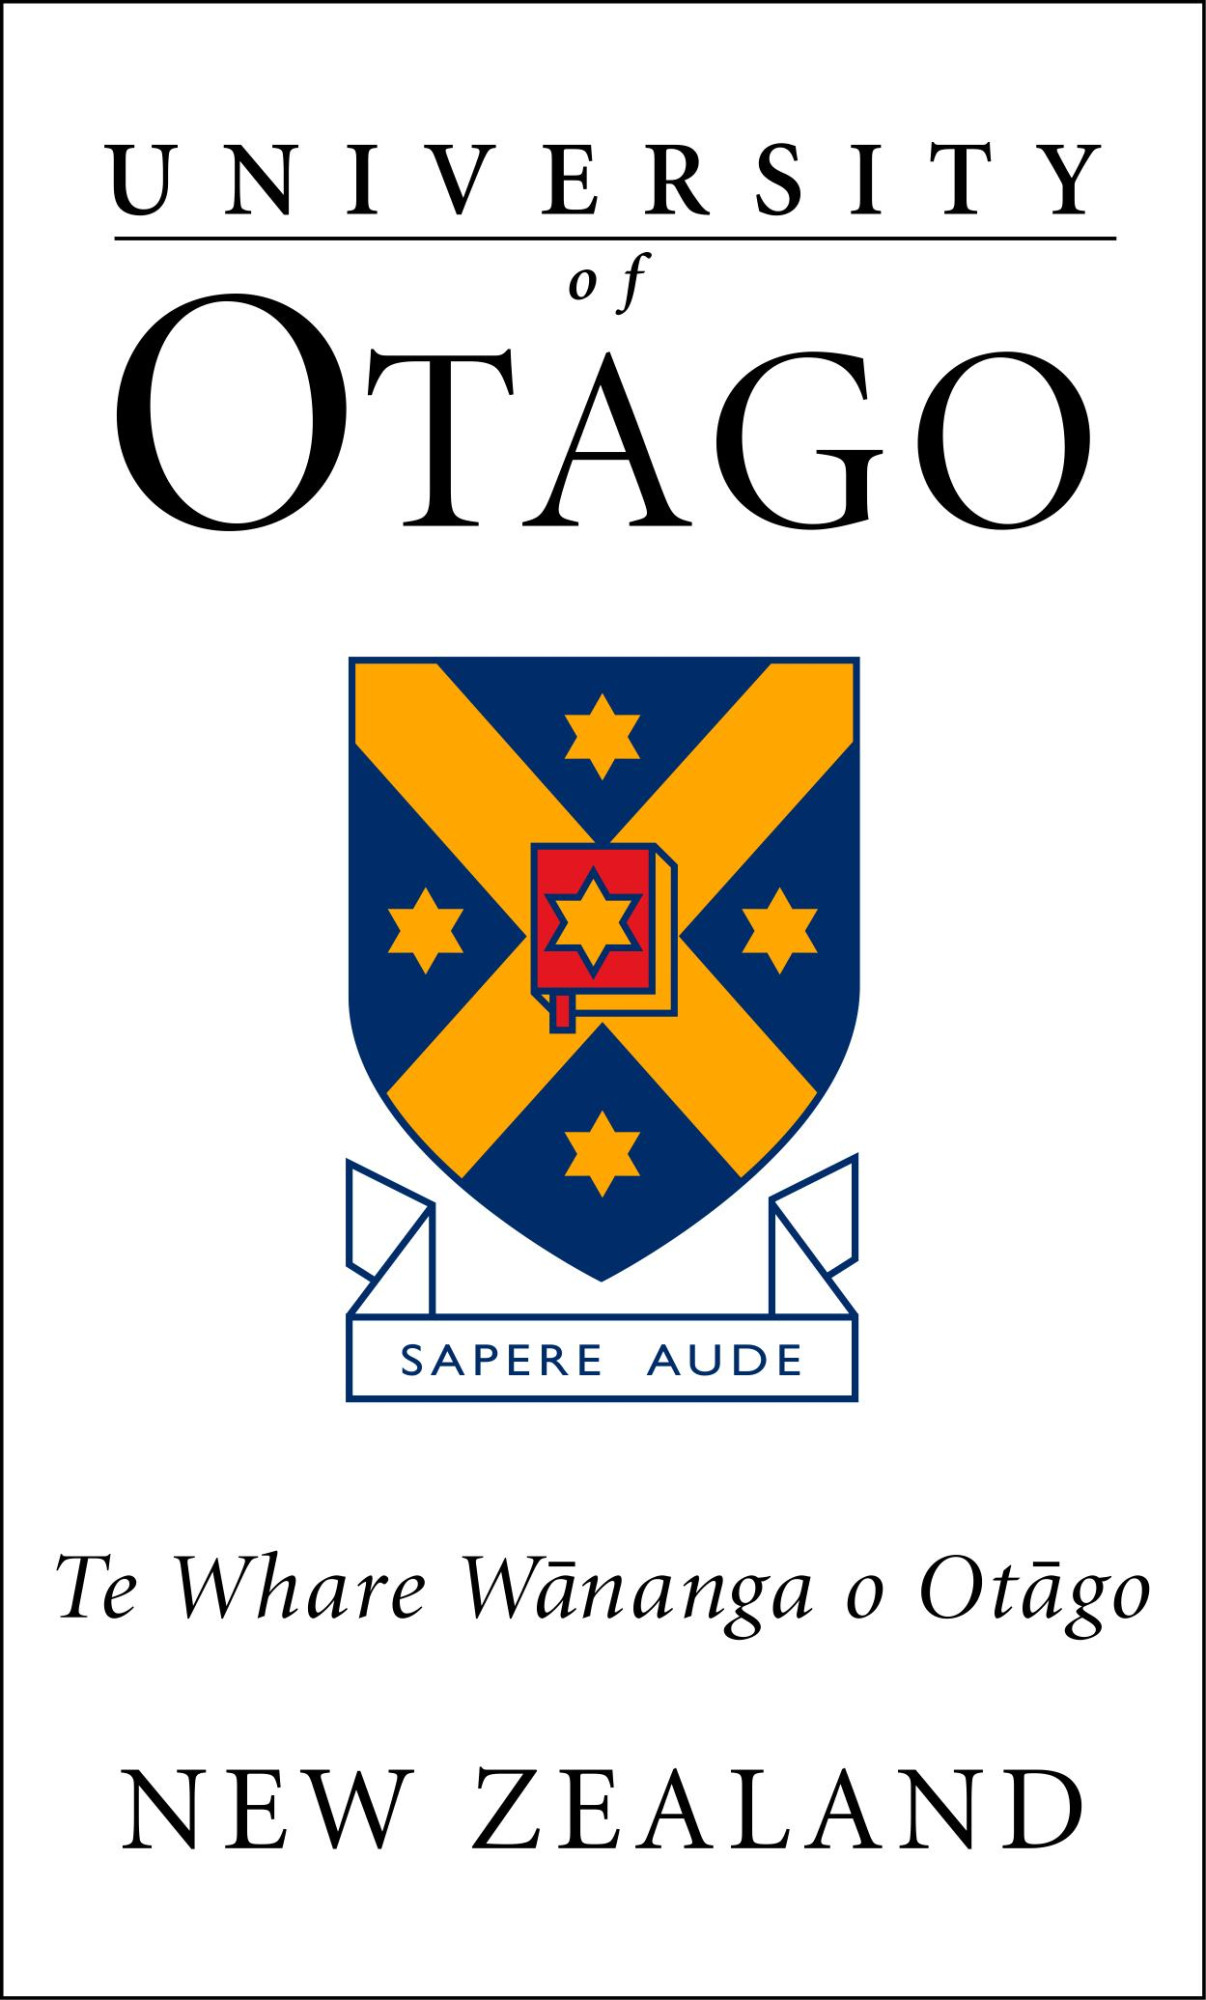 otago-uni-logo